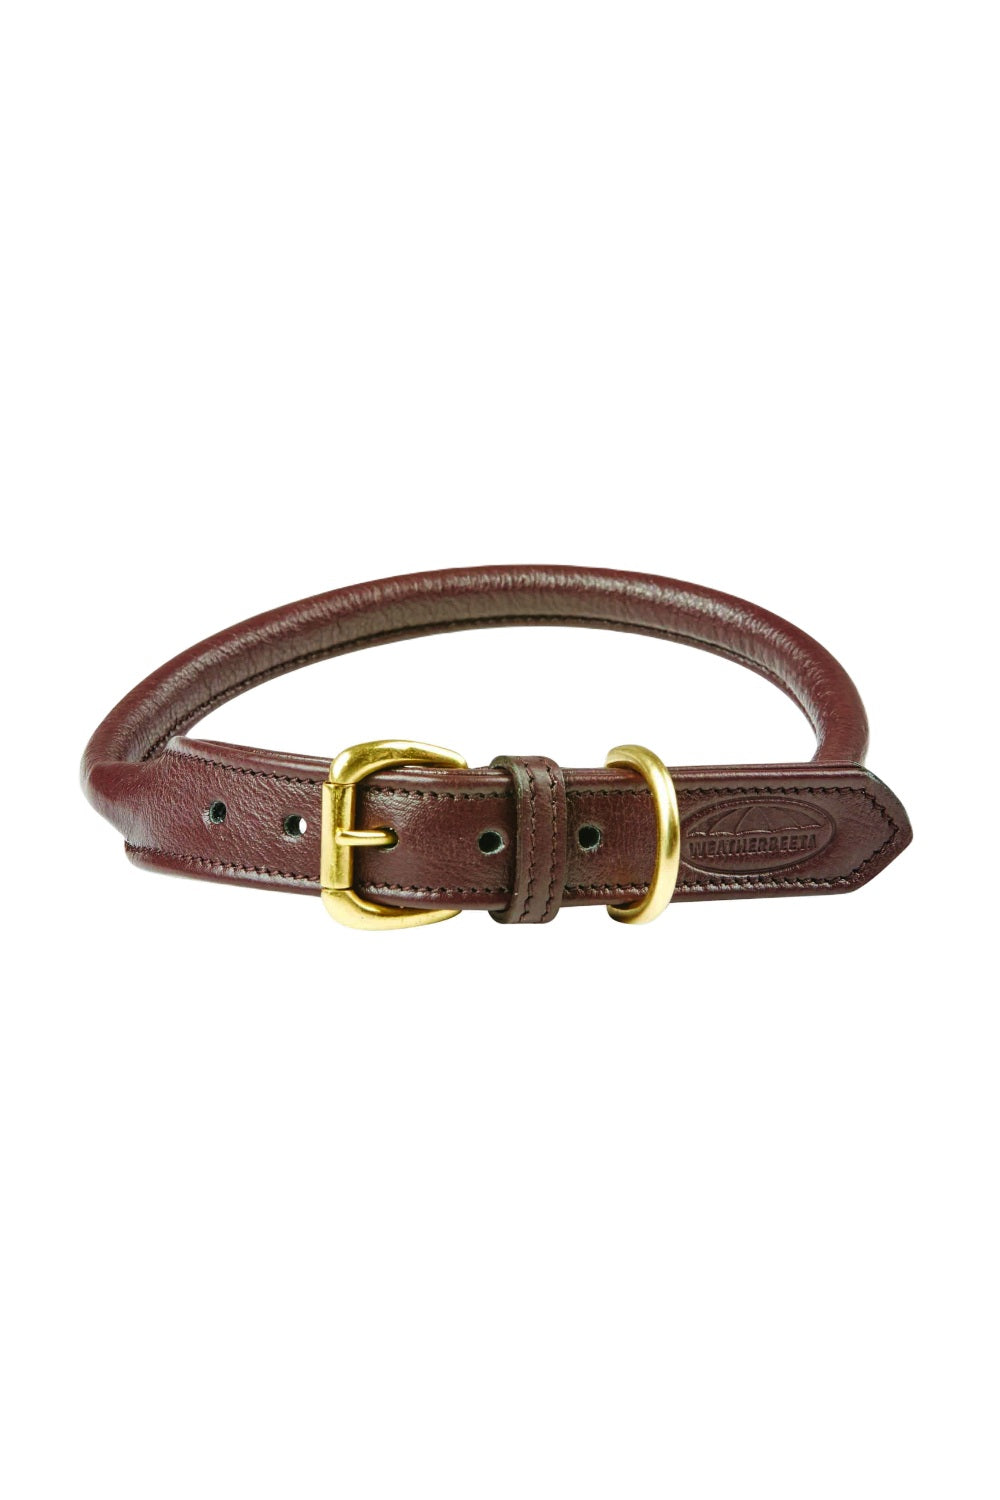 WeatherBeeta Rolled Leather Dog Collar In Brown 